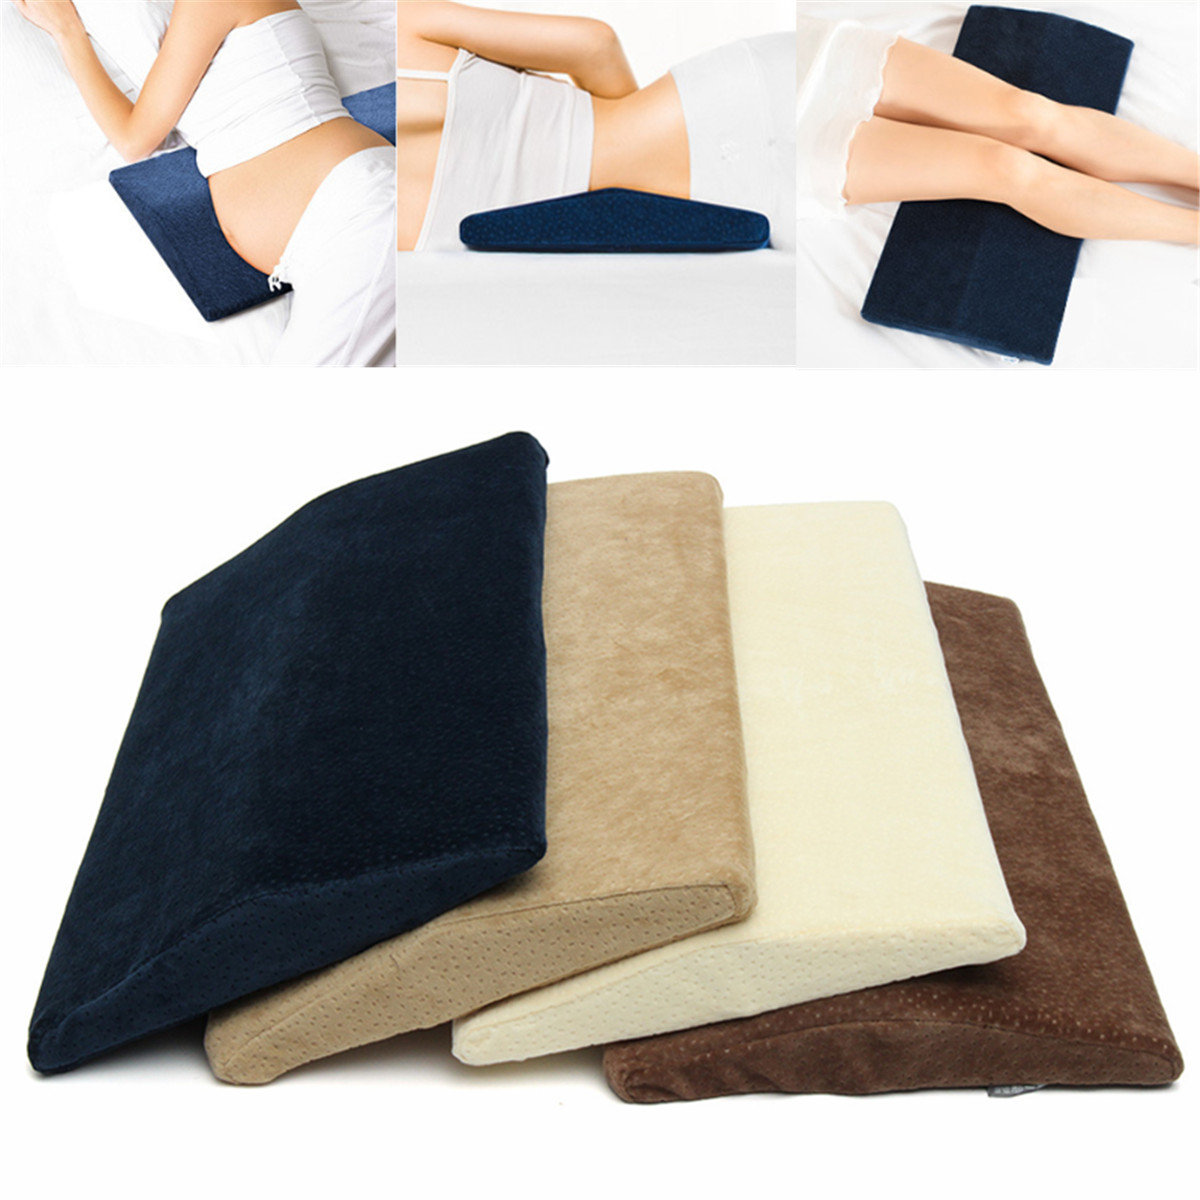 

Lumbar Memory Foam Pillow Triangle Sleeping Waist Back Support Cushion Pad, Coffee white brown navy